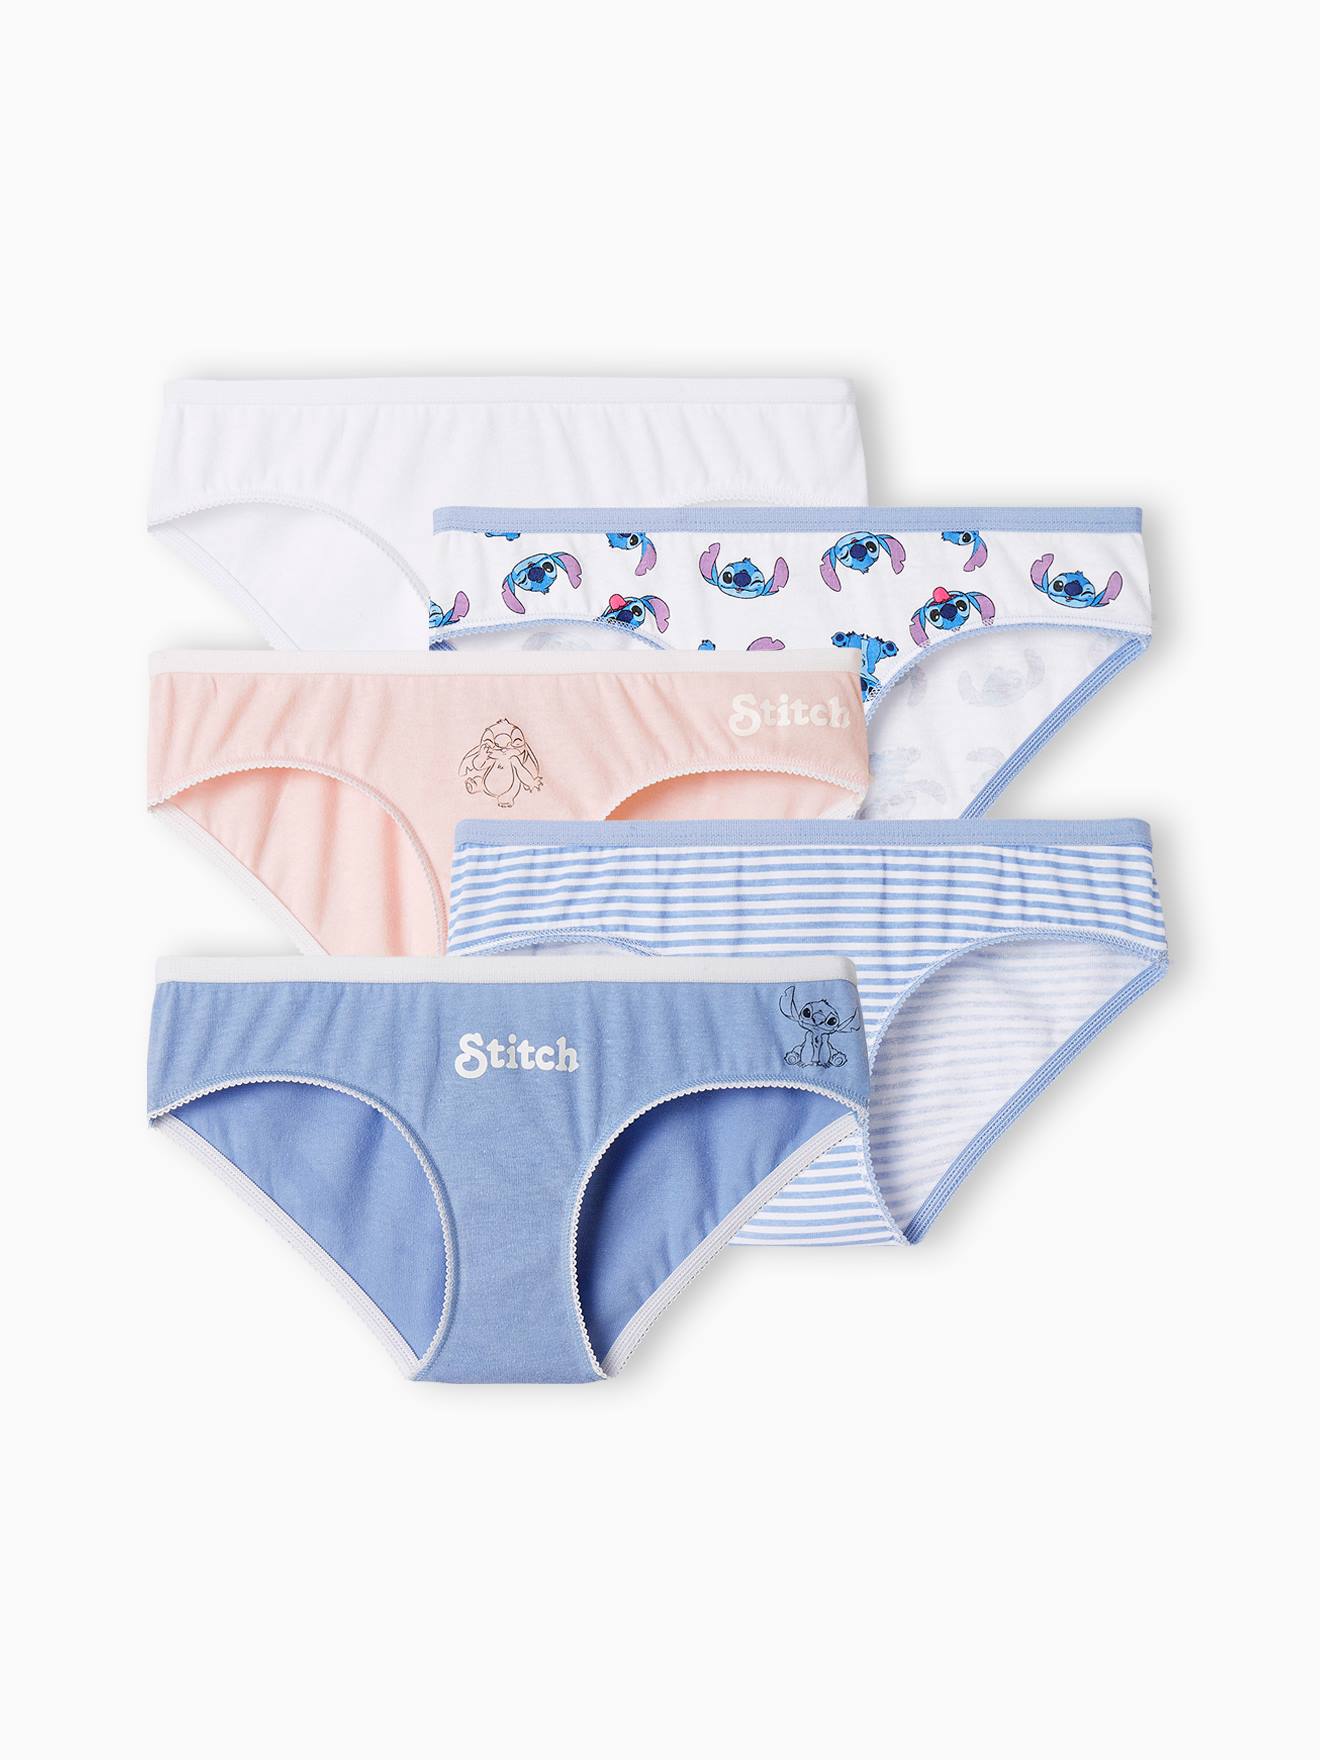 Disney Princess Knickers Pants Underwear Girls – Pack of 3 (Blue, 2-3  Years) : : Fashion